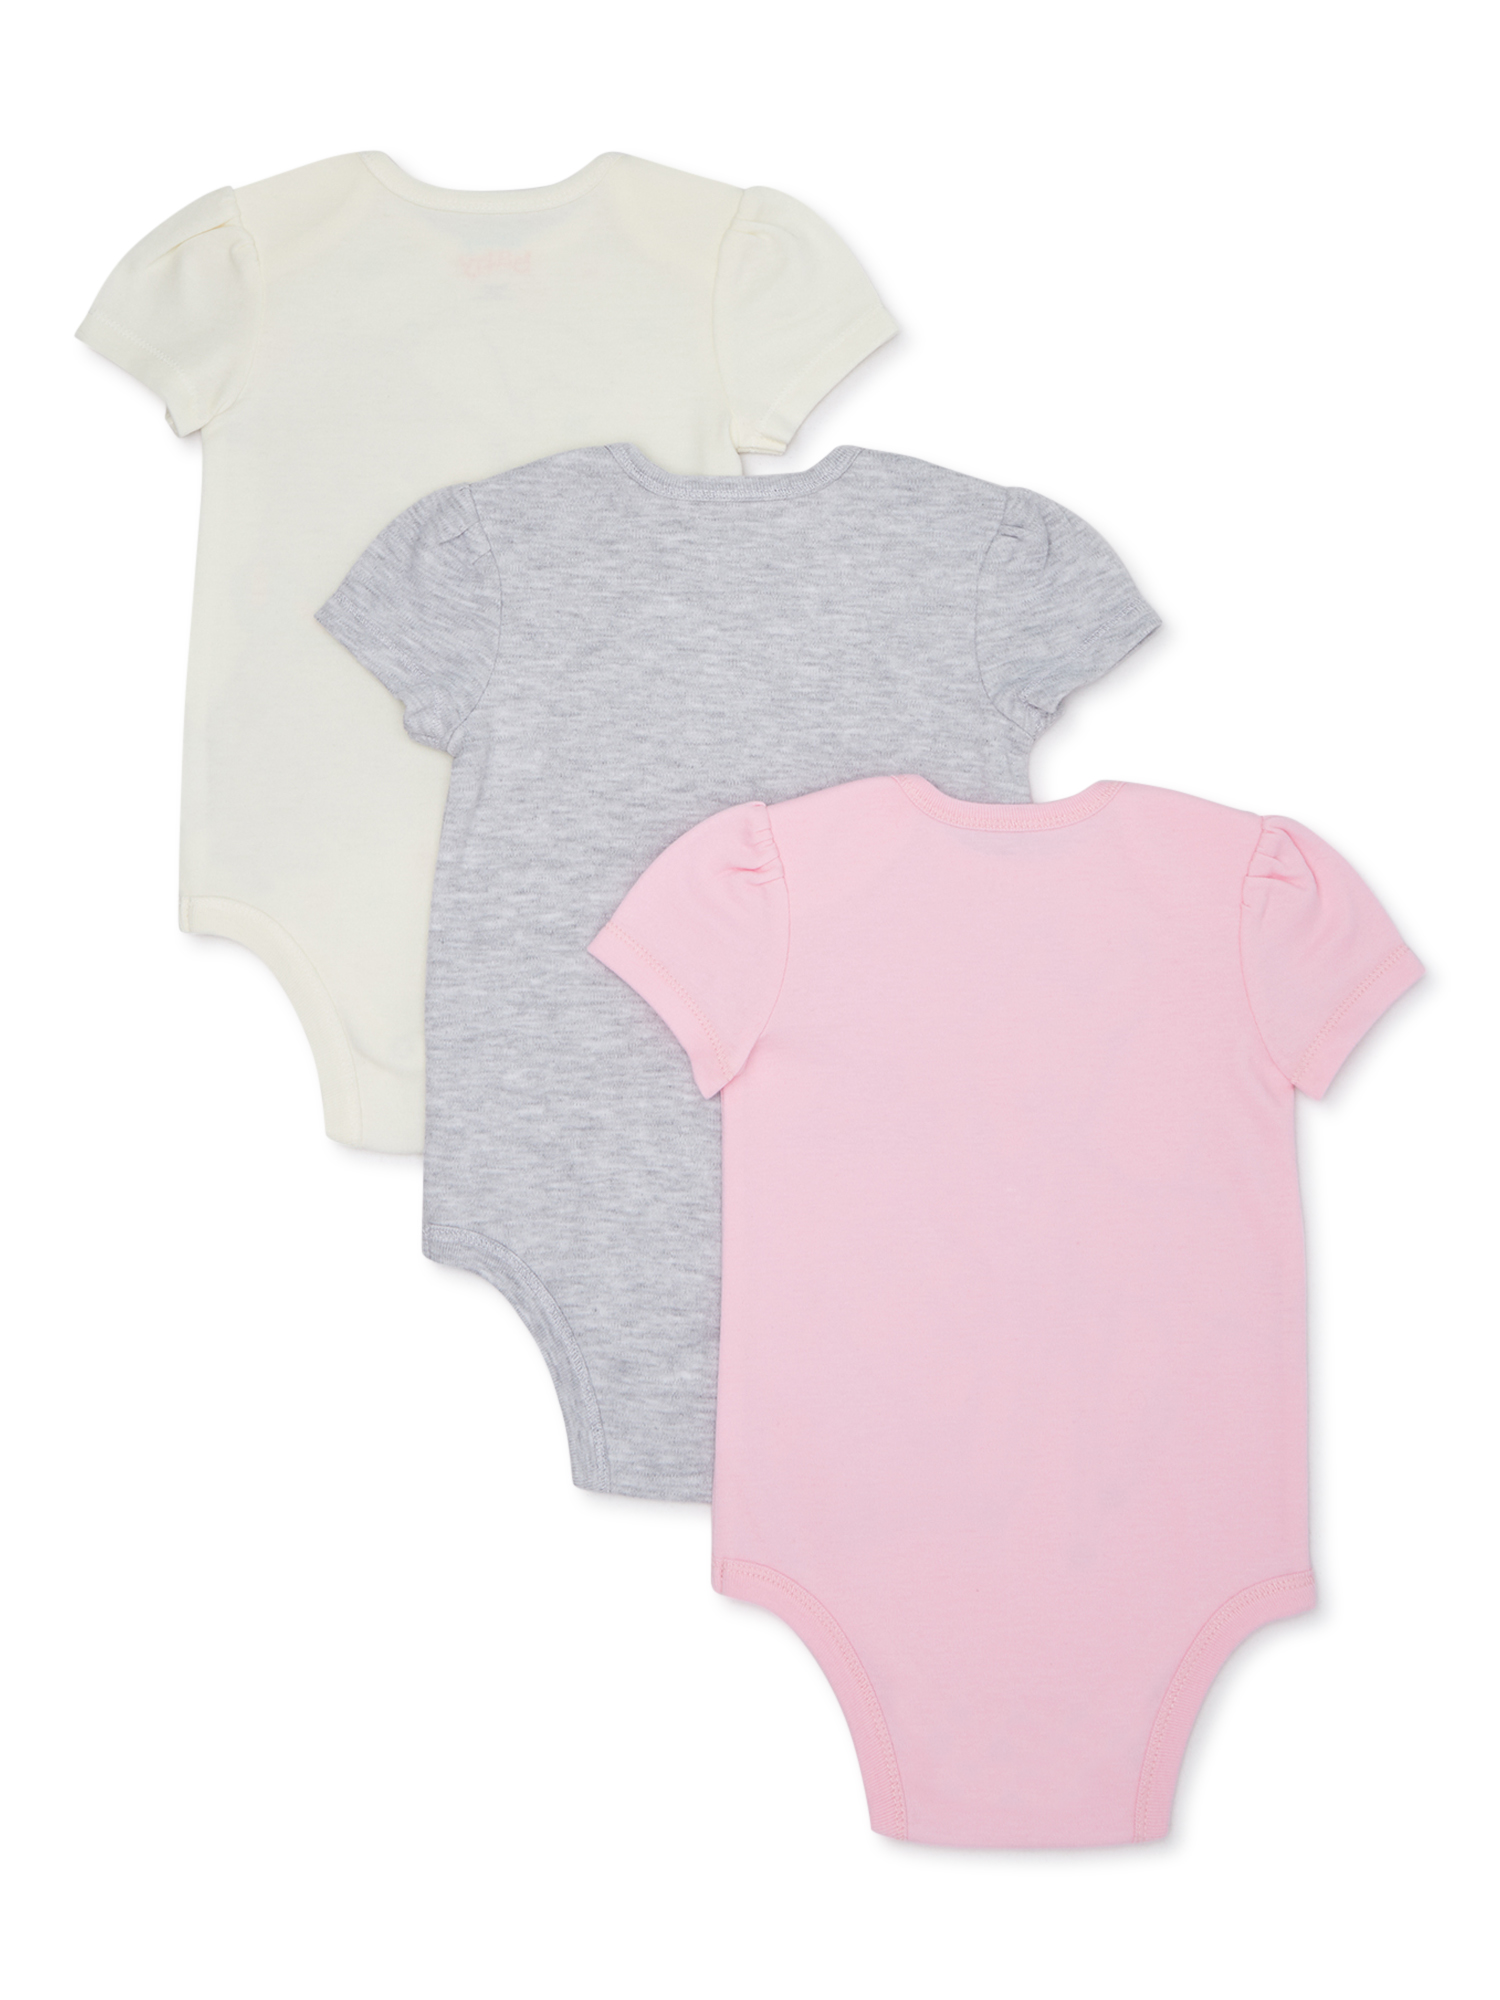 Disney Baby Girls Bodysuits, 3-Pack - image 2 of 3